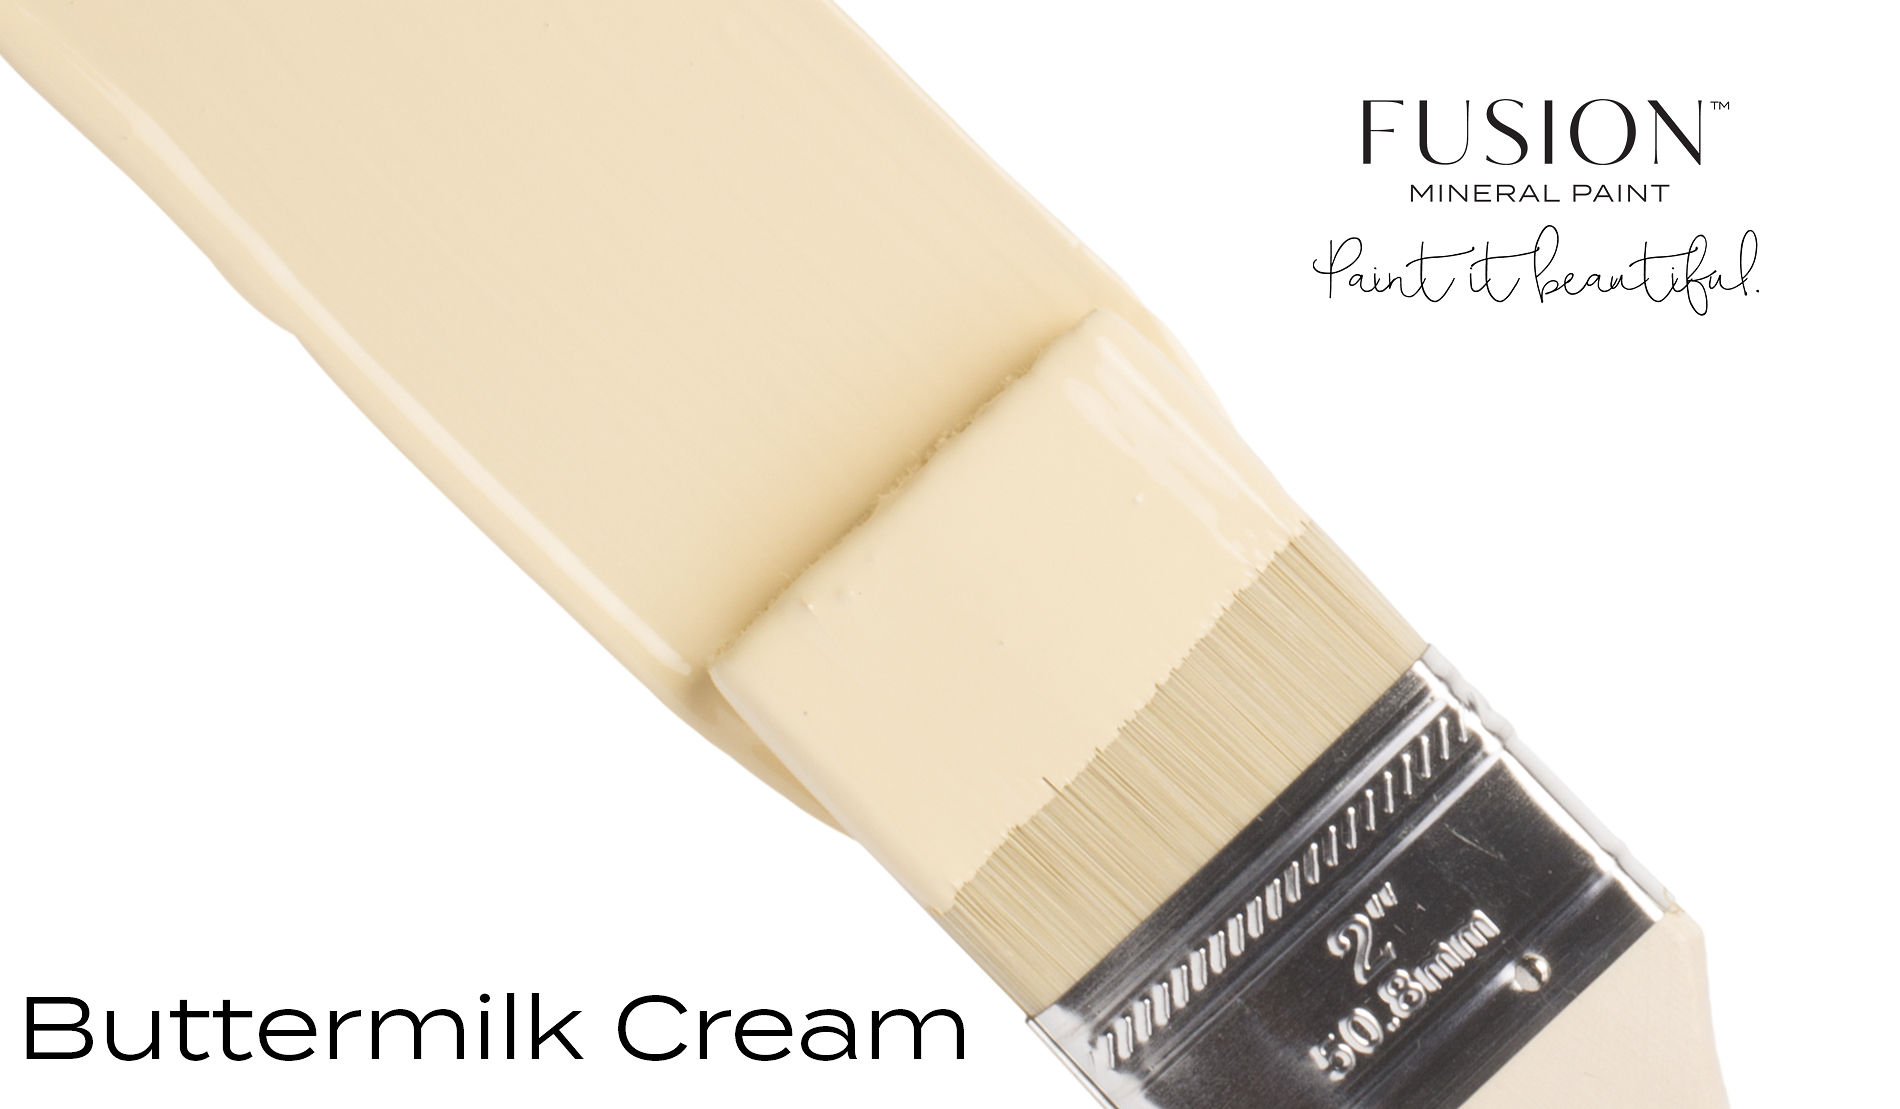 Buttermilk Cream Fusion Minerail Paint Goed Gestyled brielle